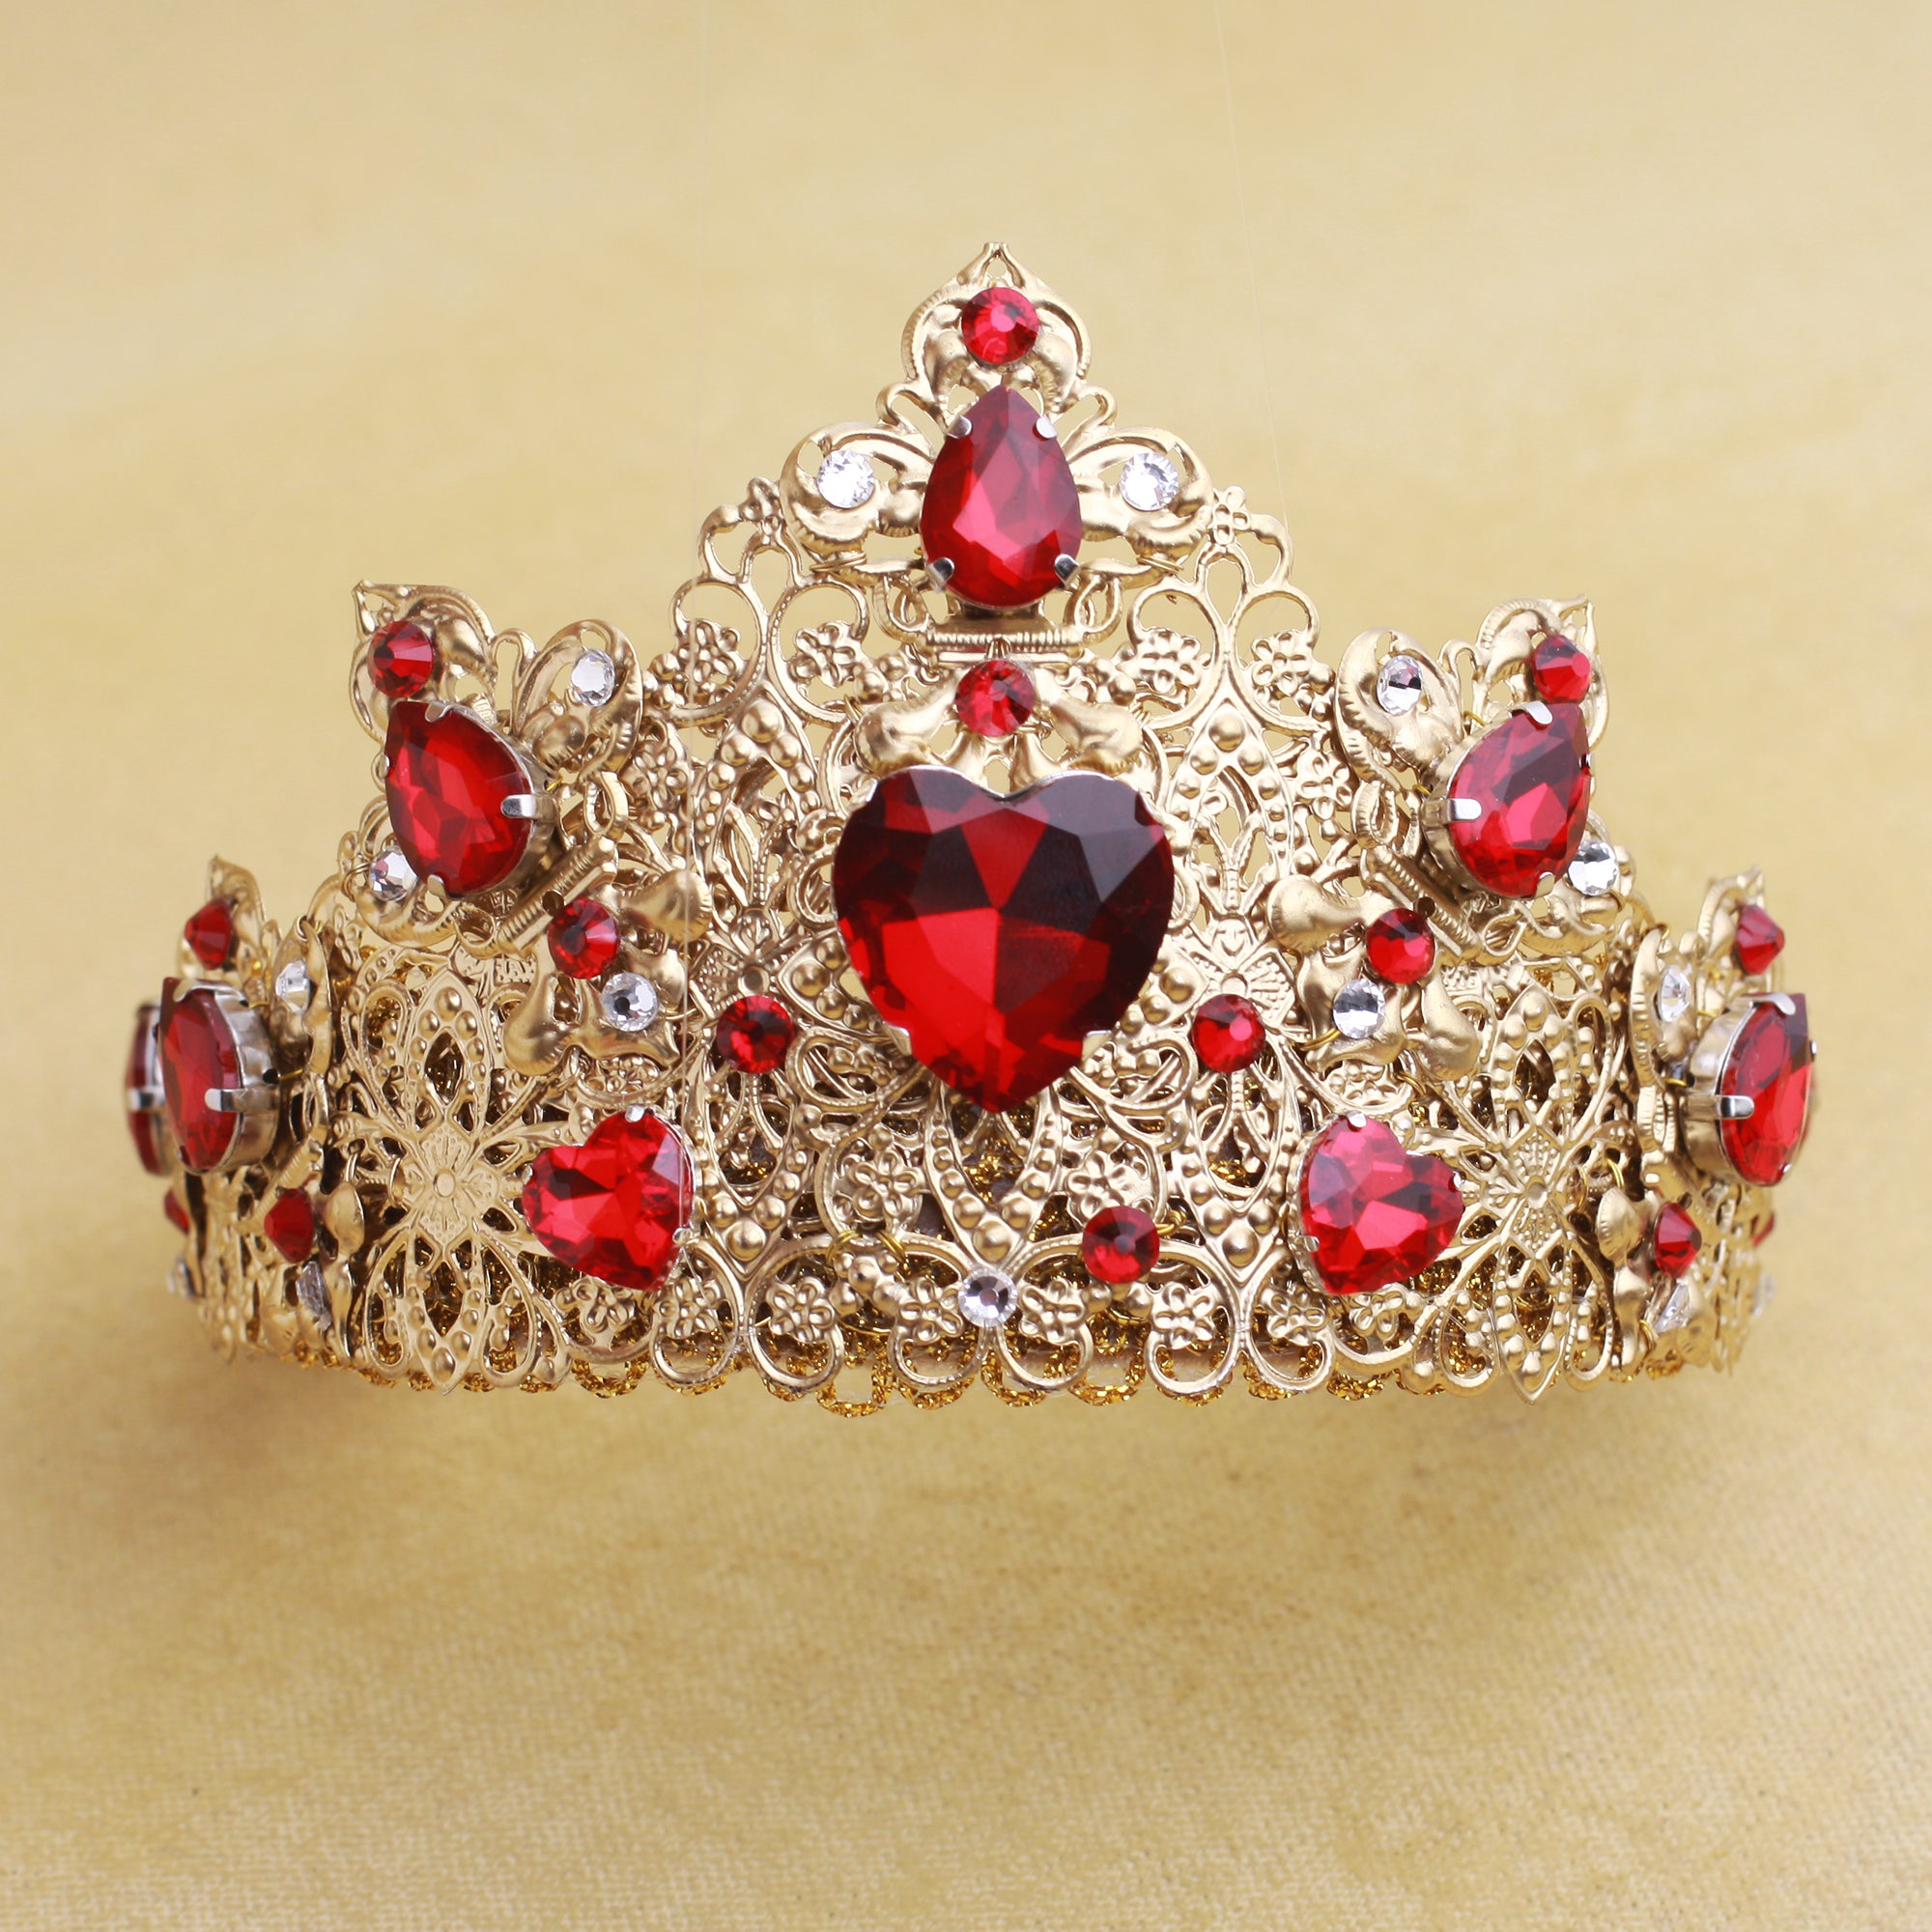 MINTHE Red Queen Crown, Queen Of Hearts, Crown - olenagrin